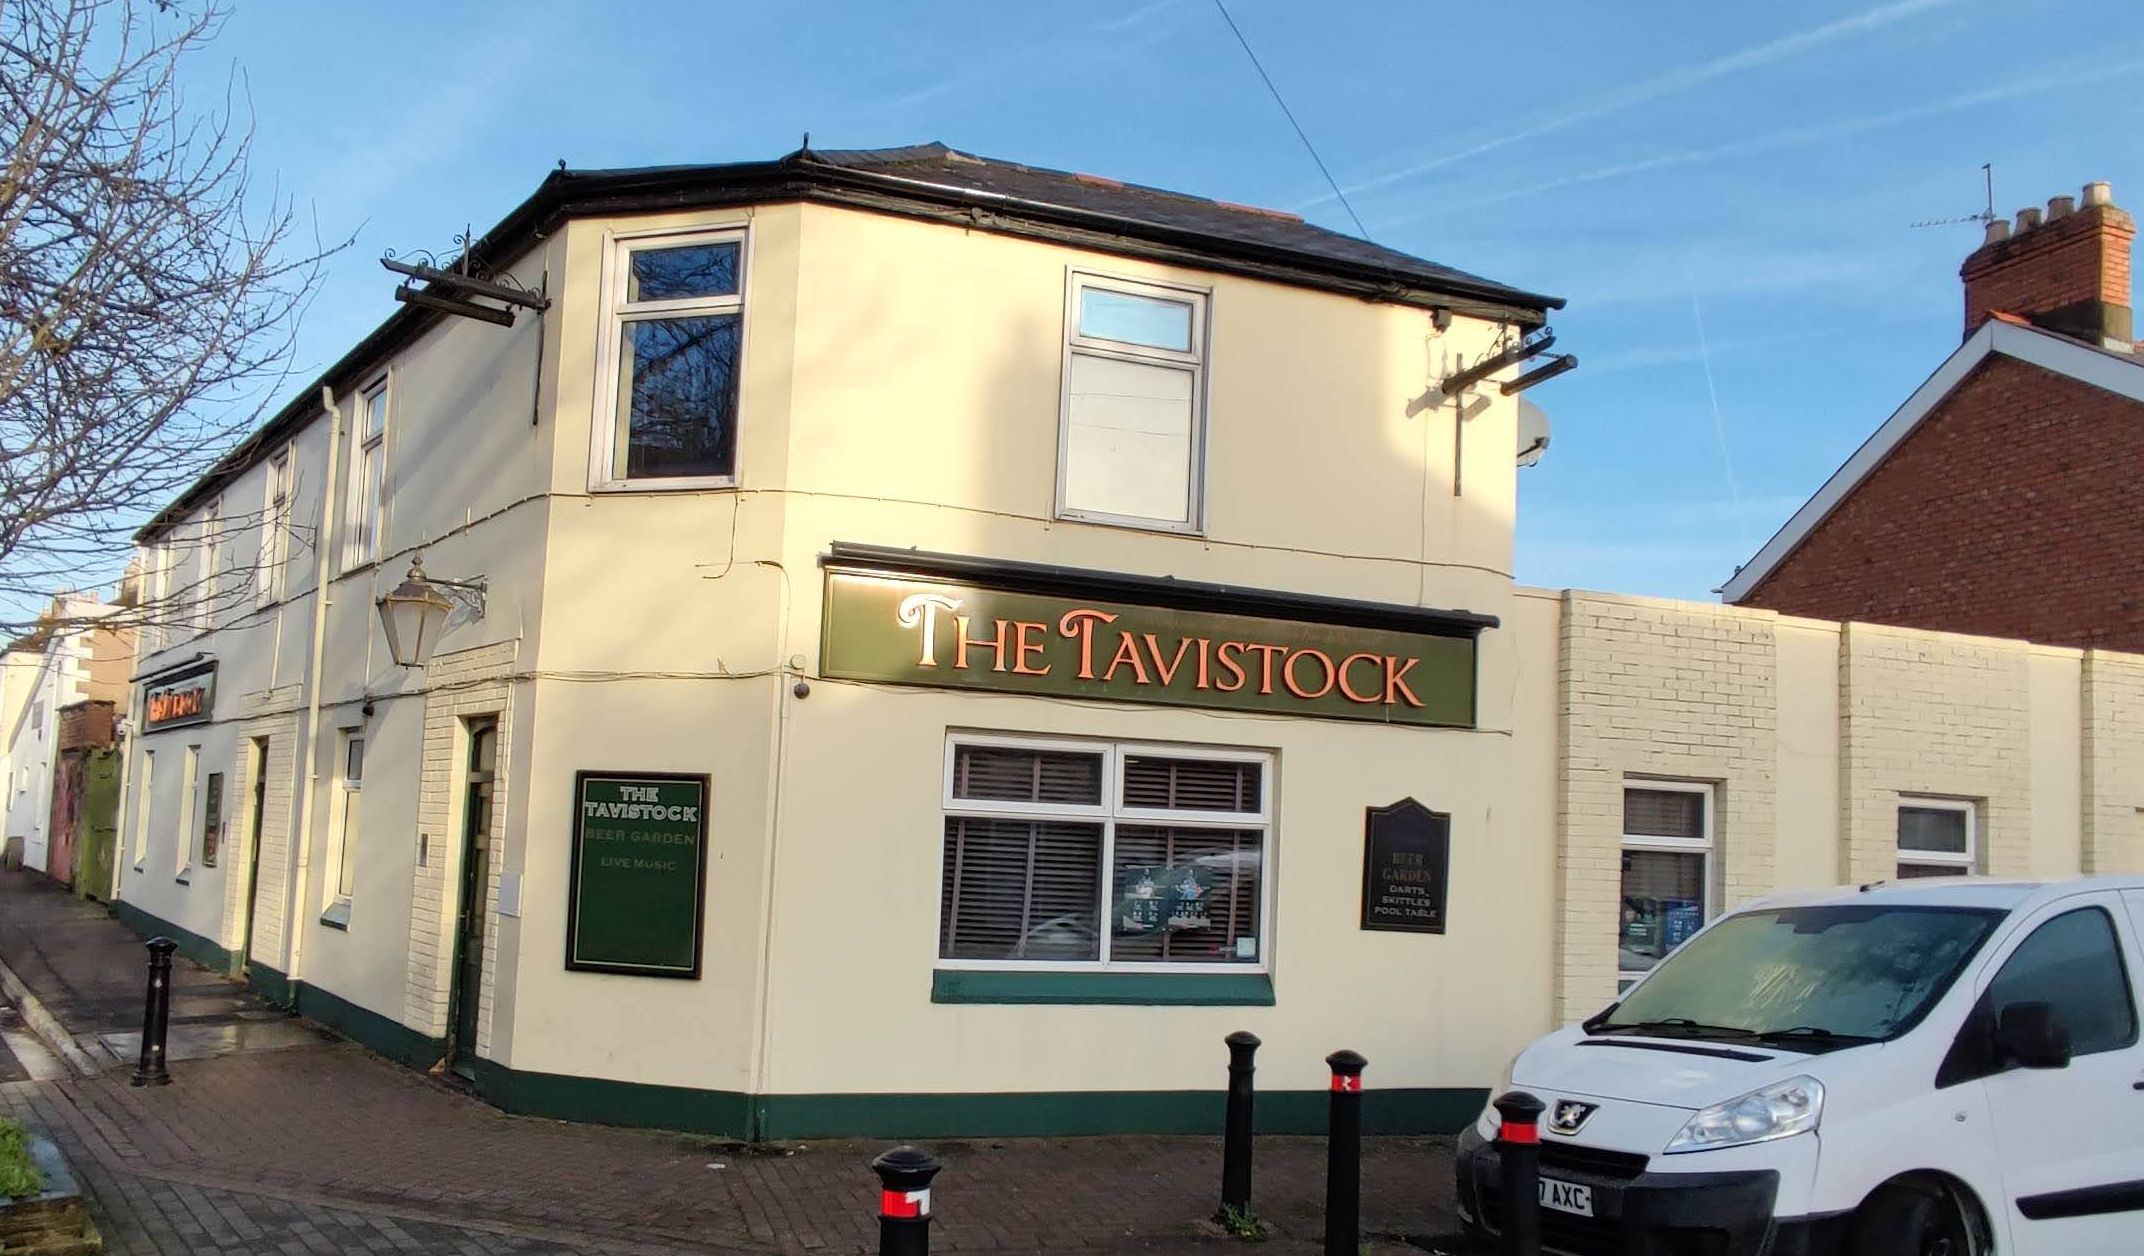 Photo of The Tavistock pub Cardiff